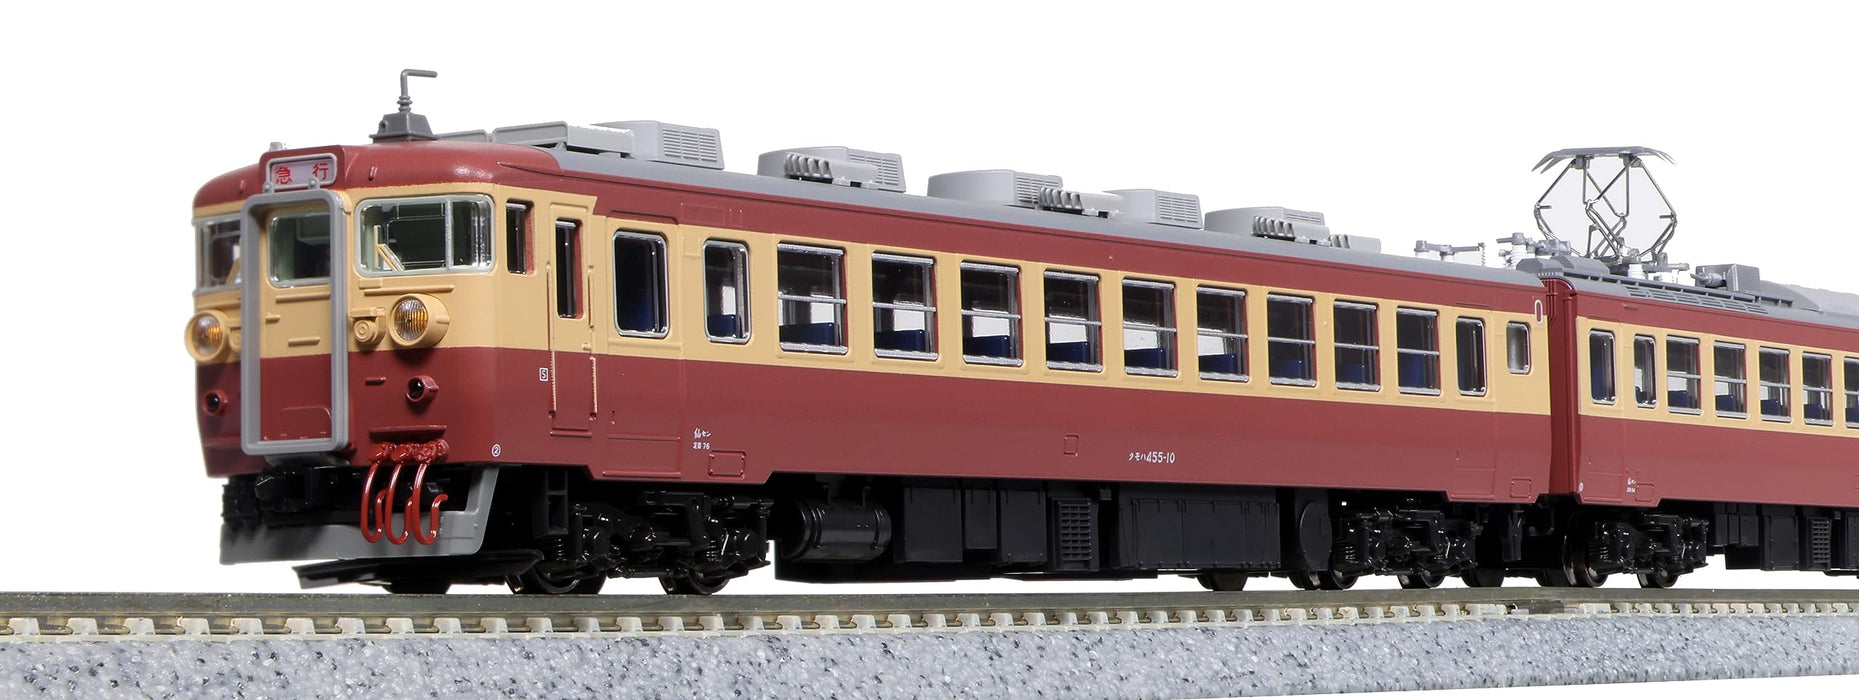 Kato Spur N 455 Matsushima 7-Wagen-Modelleisenbahn – Serie Express 10-1632